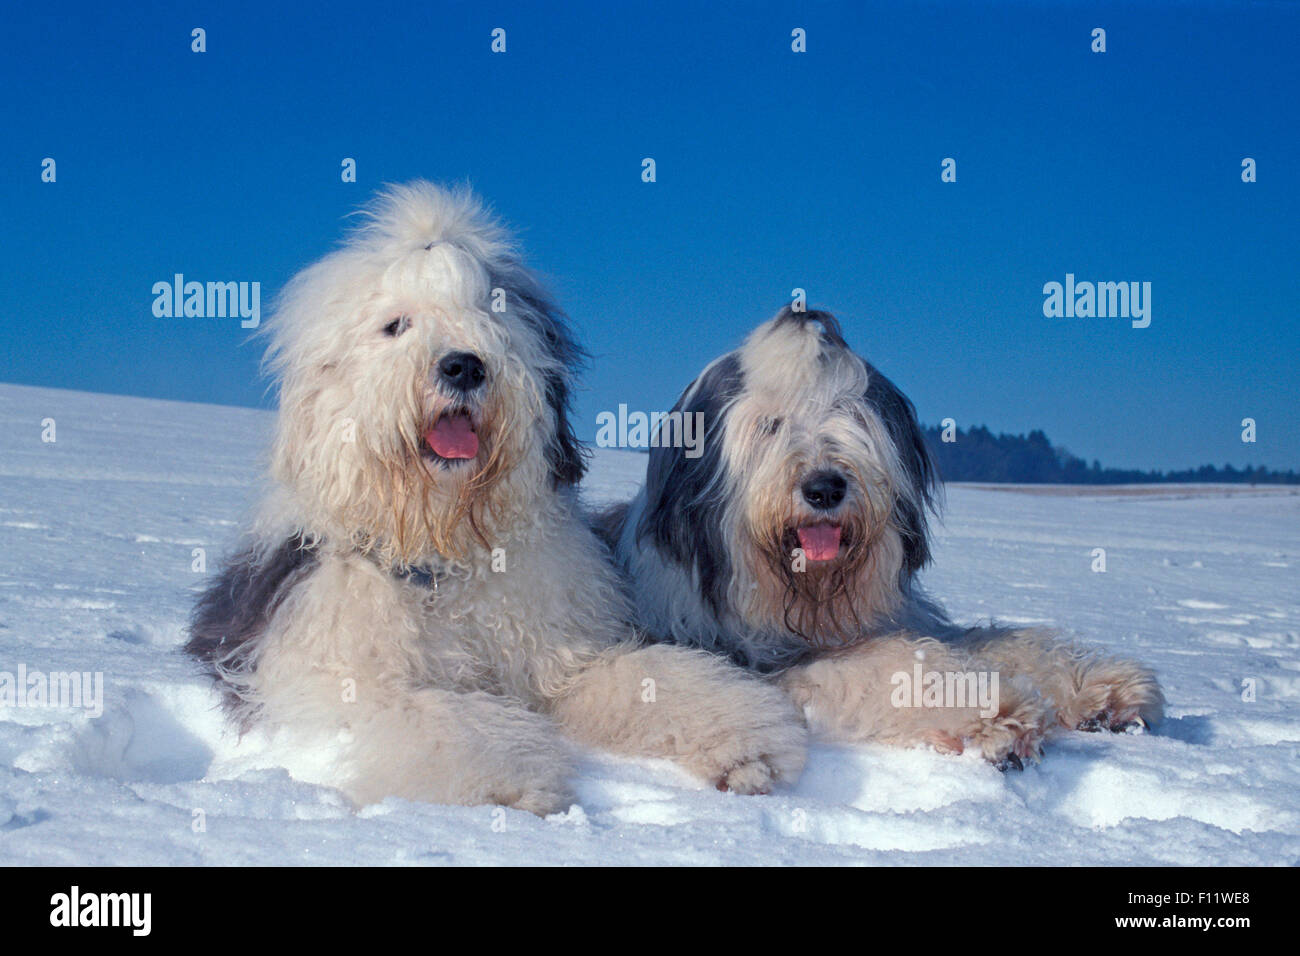 Old english sheepdog uk hi-res stock photography and images - Alamy